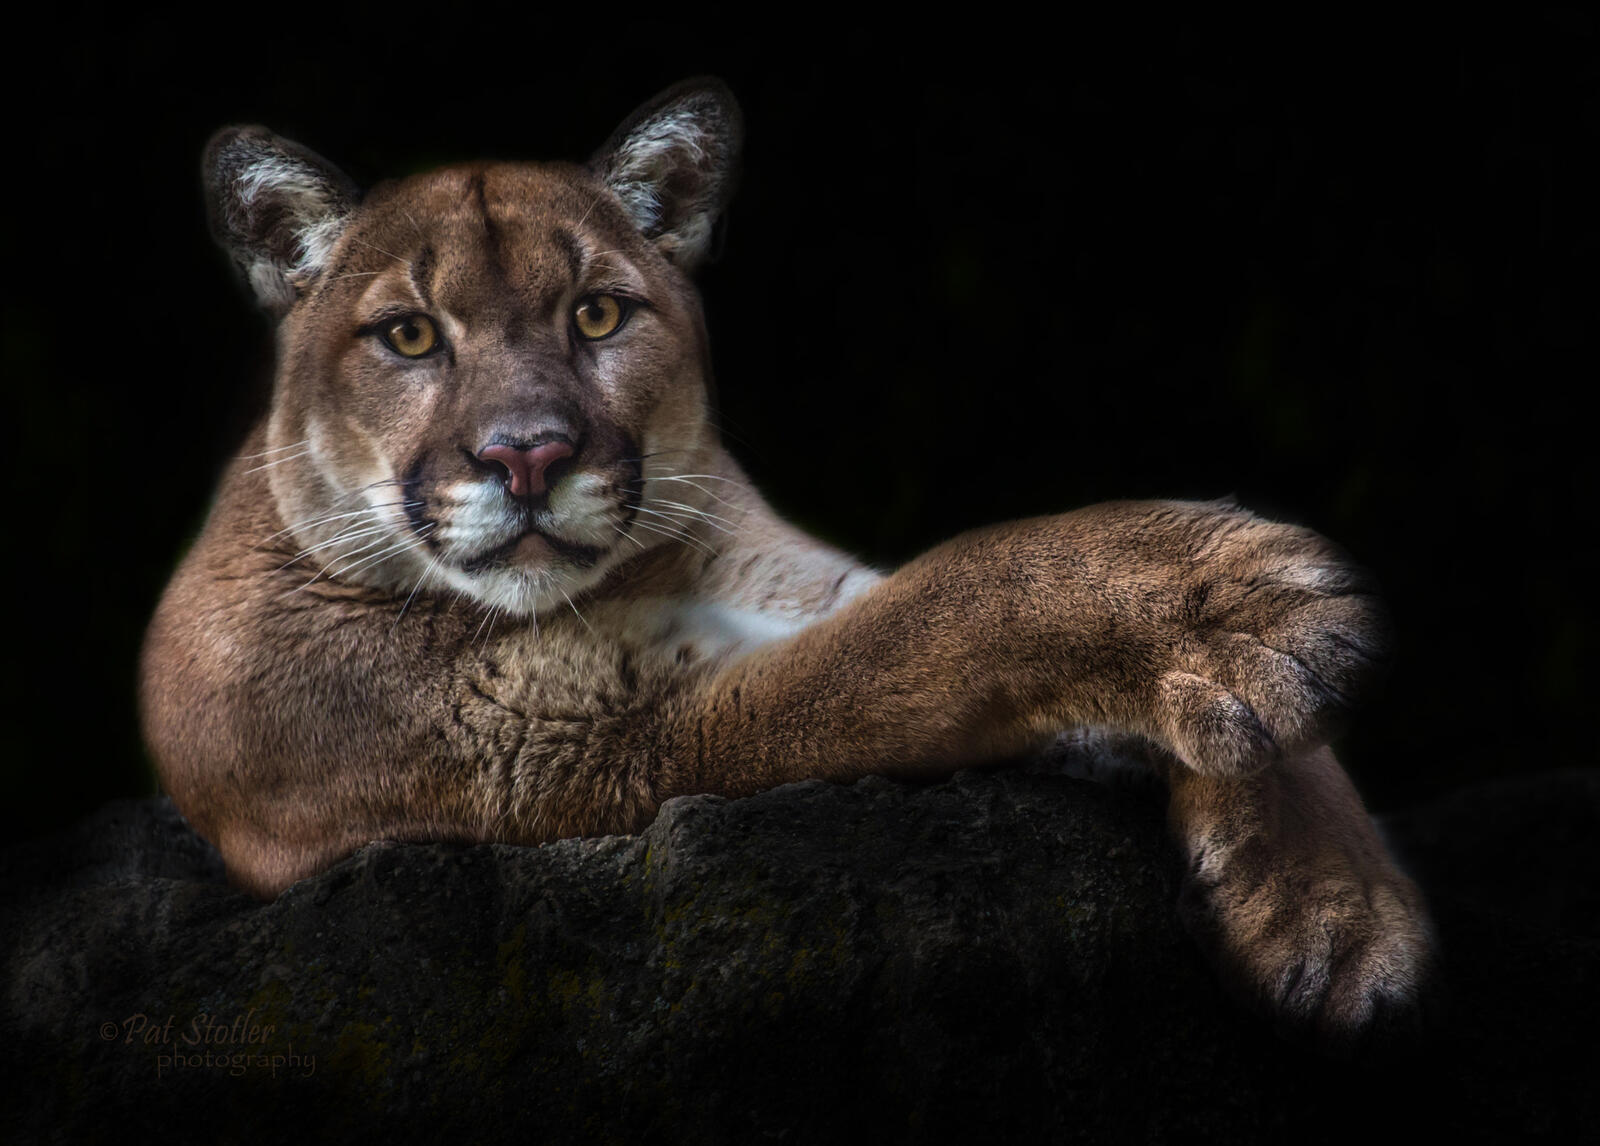 Wallpapers Cougar predator animal on the desktop